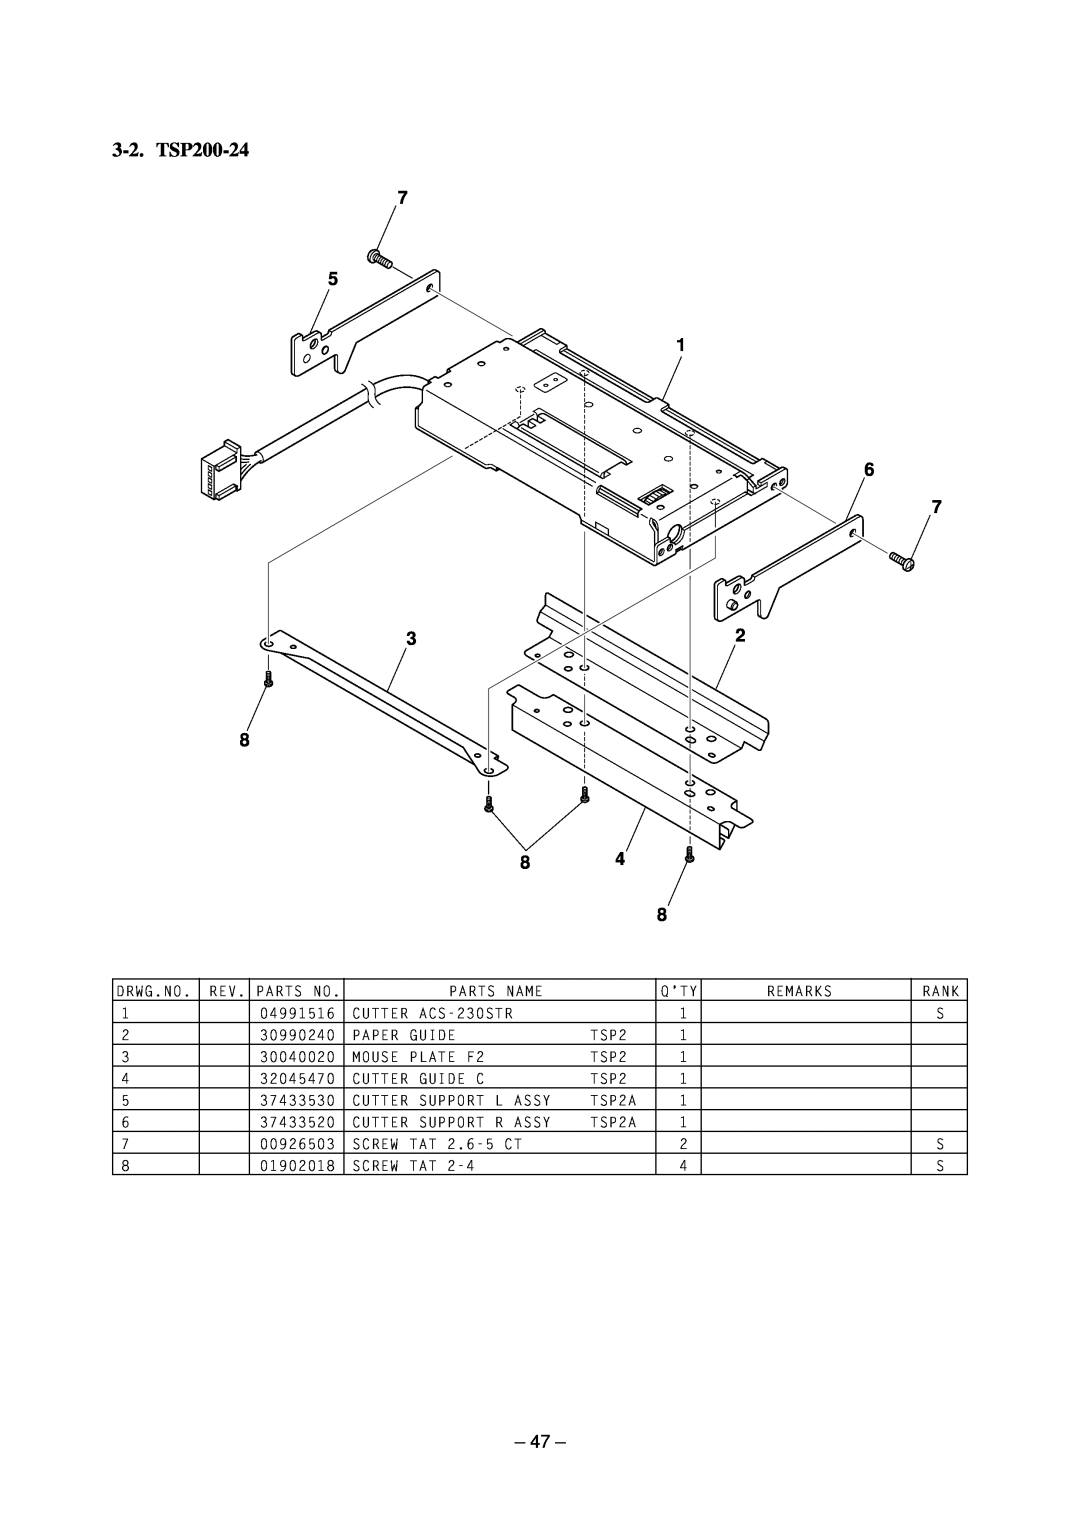 Star Micronics technical manual TSP200-24 